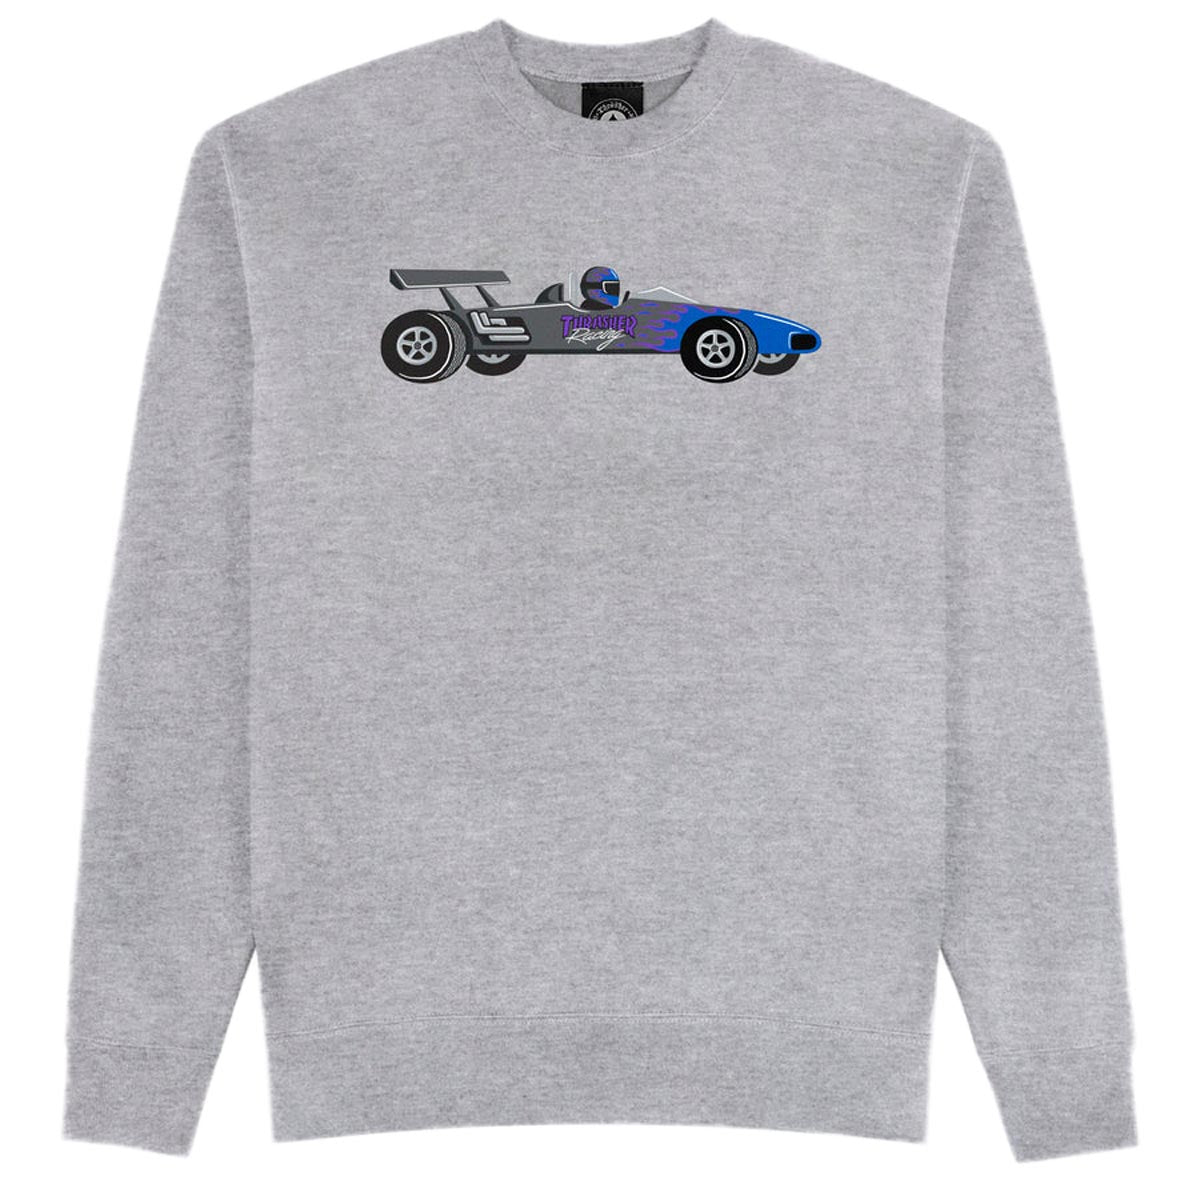 Thrasher Racecar Sweatshirt - Sport Grey image 1